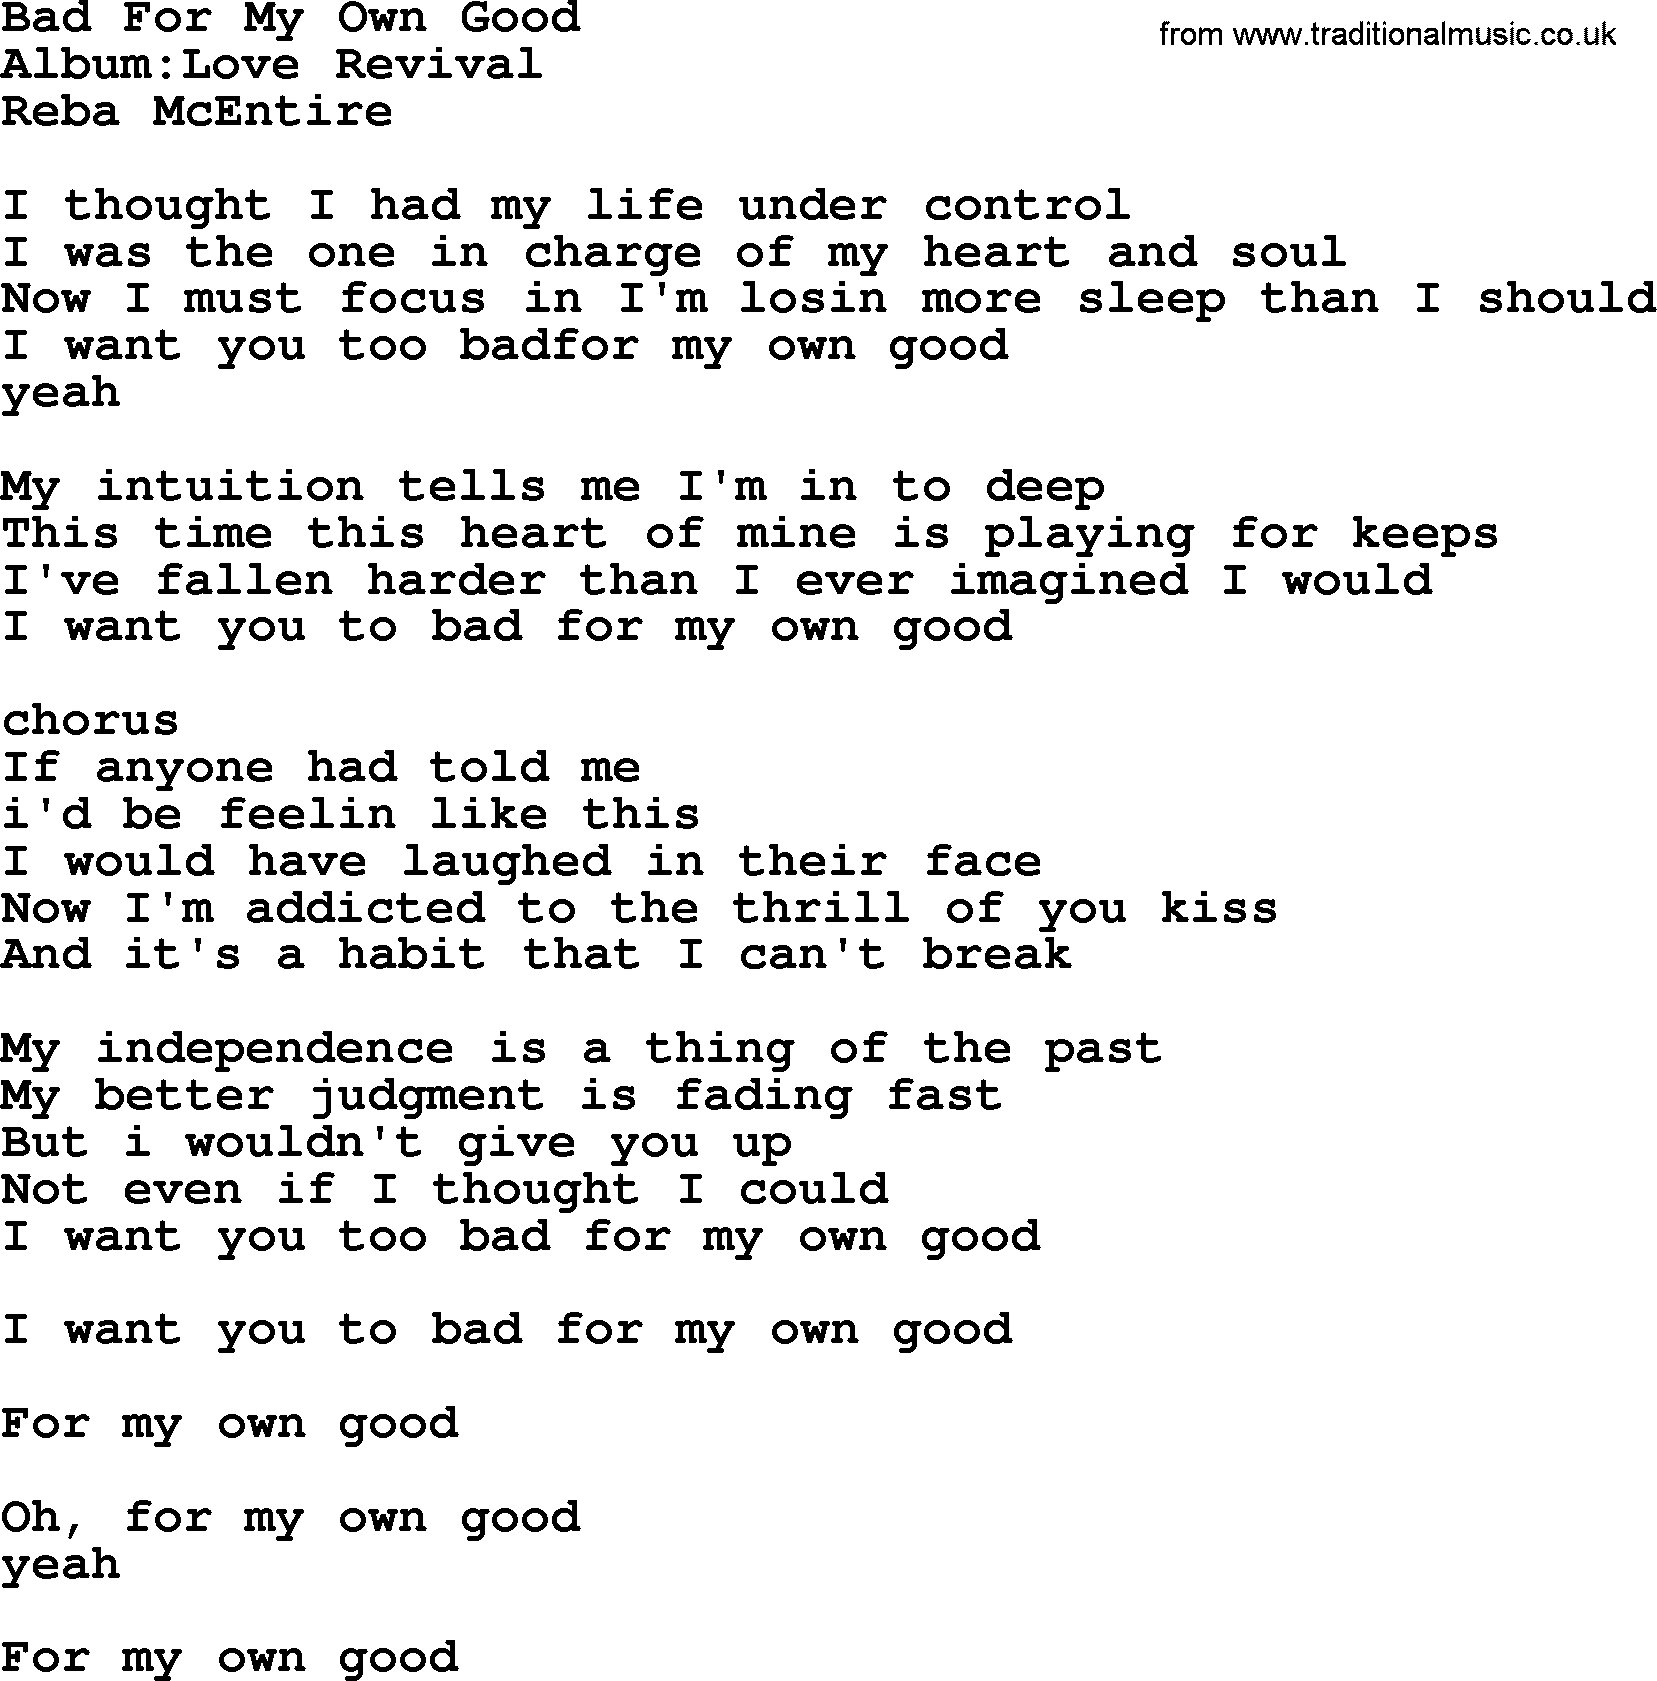 Reba McEntire song: Bad For My Own Good lyrics